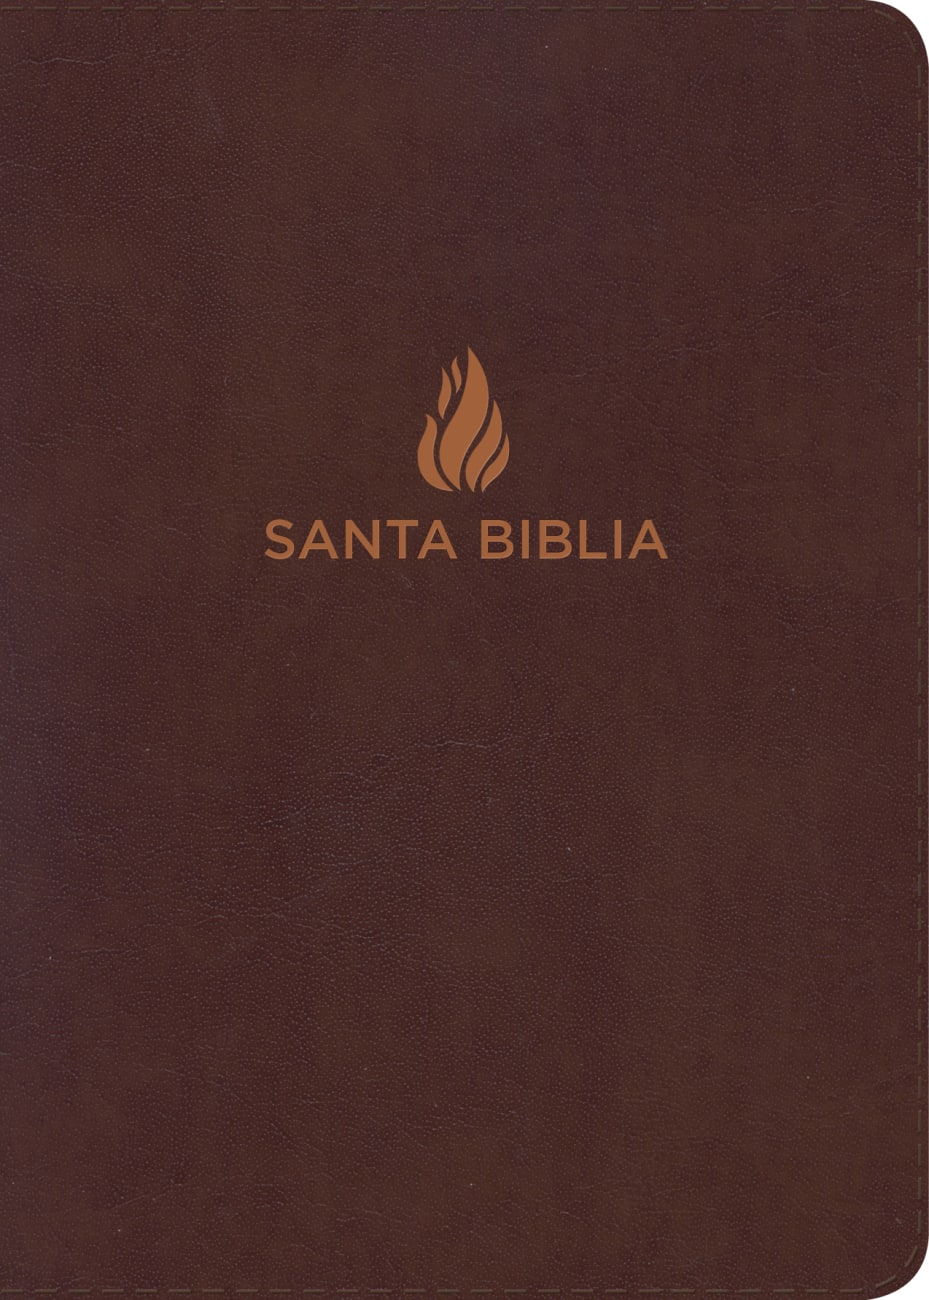 Rvr 1960 Biblia Letra Super Gigante Marron Indice (Red Letter Edition) (Super Giant Print Index) Bonded Leather